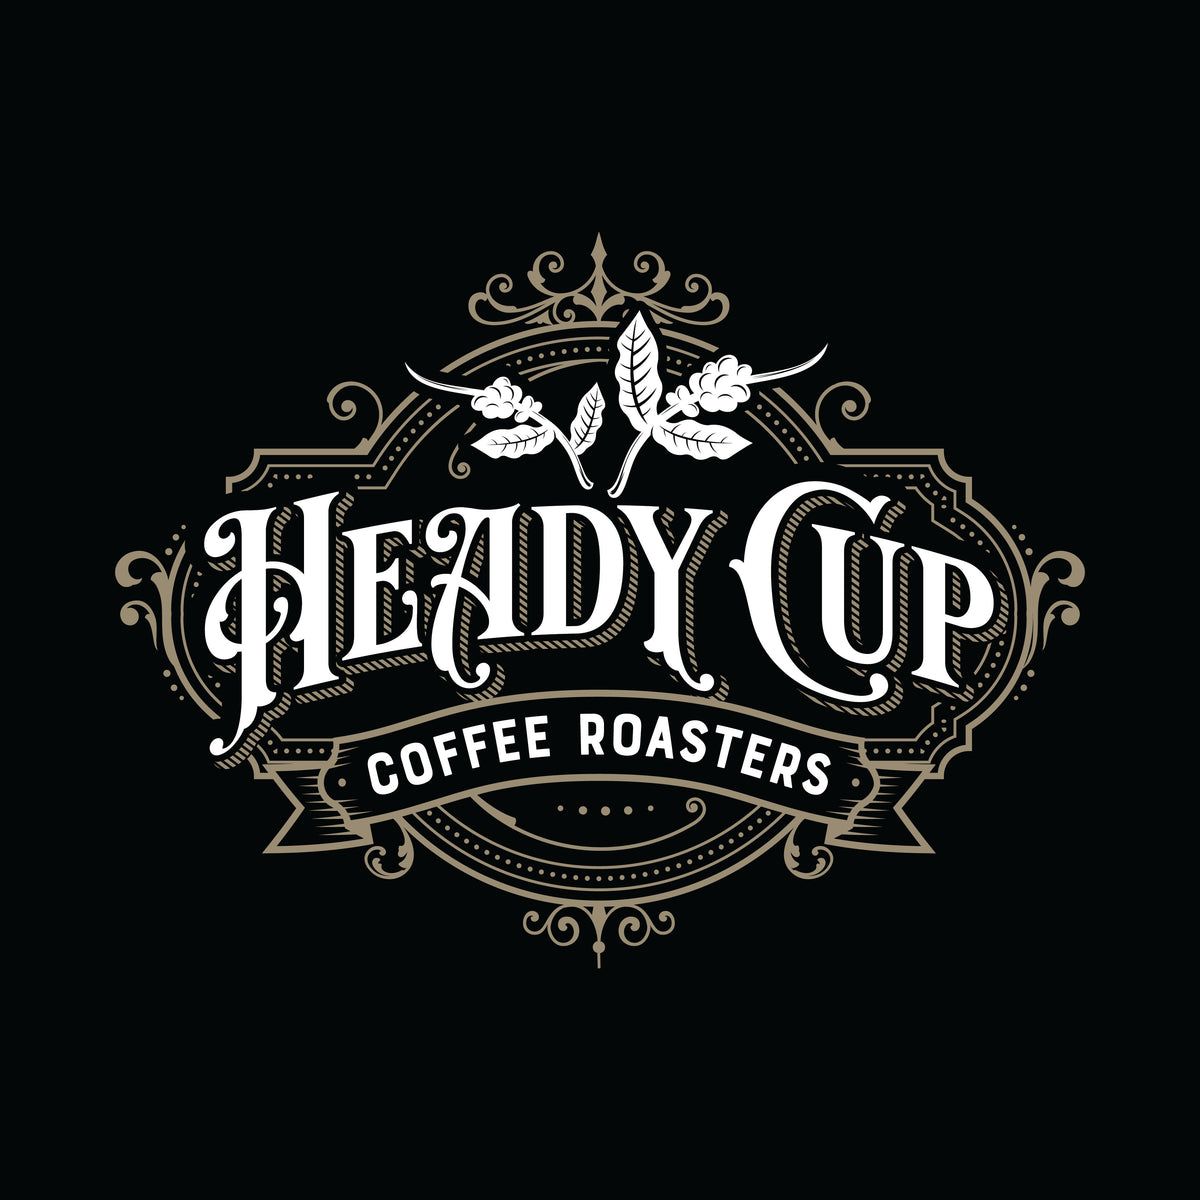 headycup.com